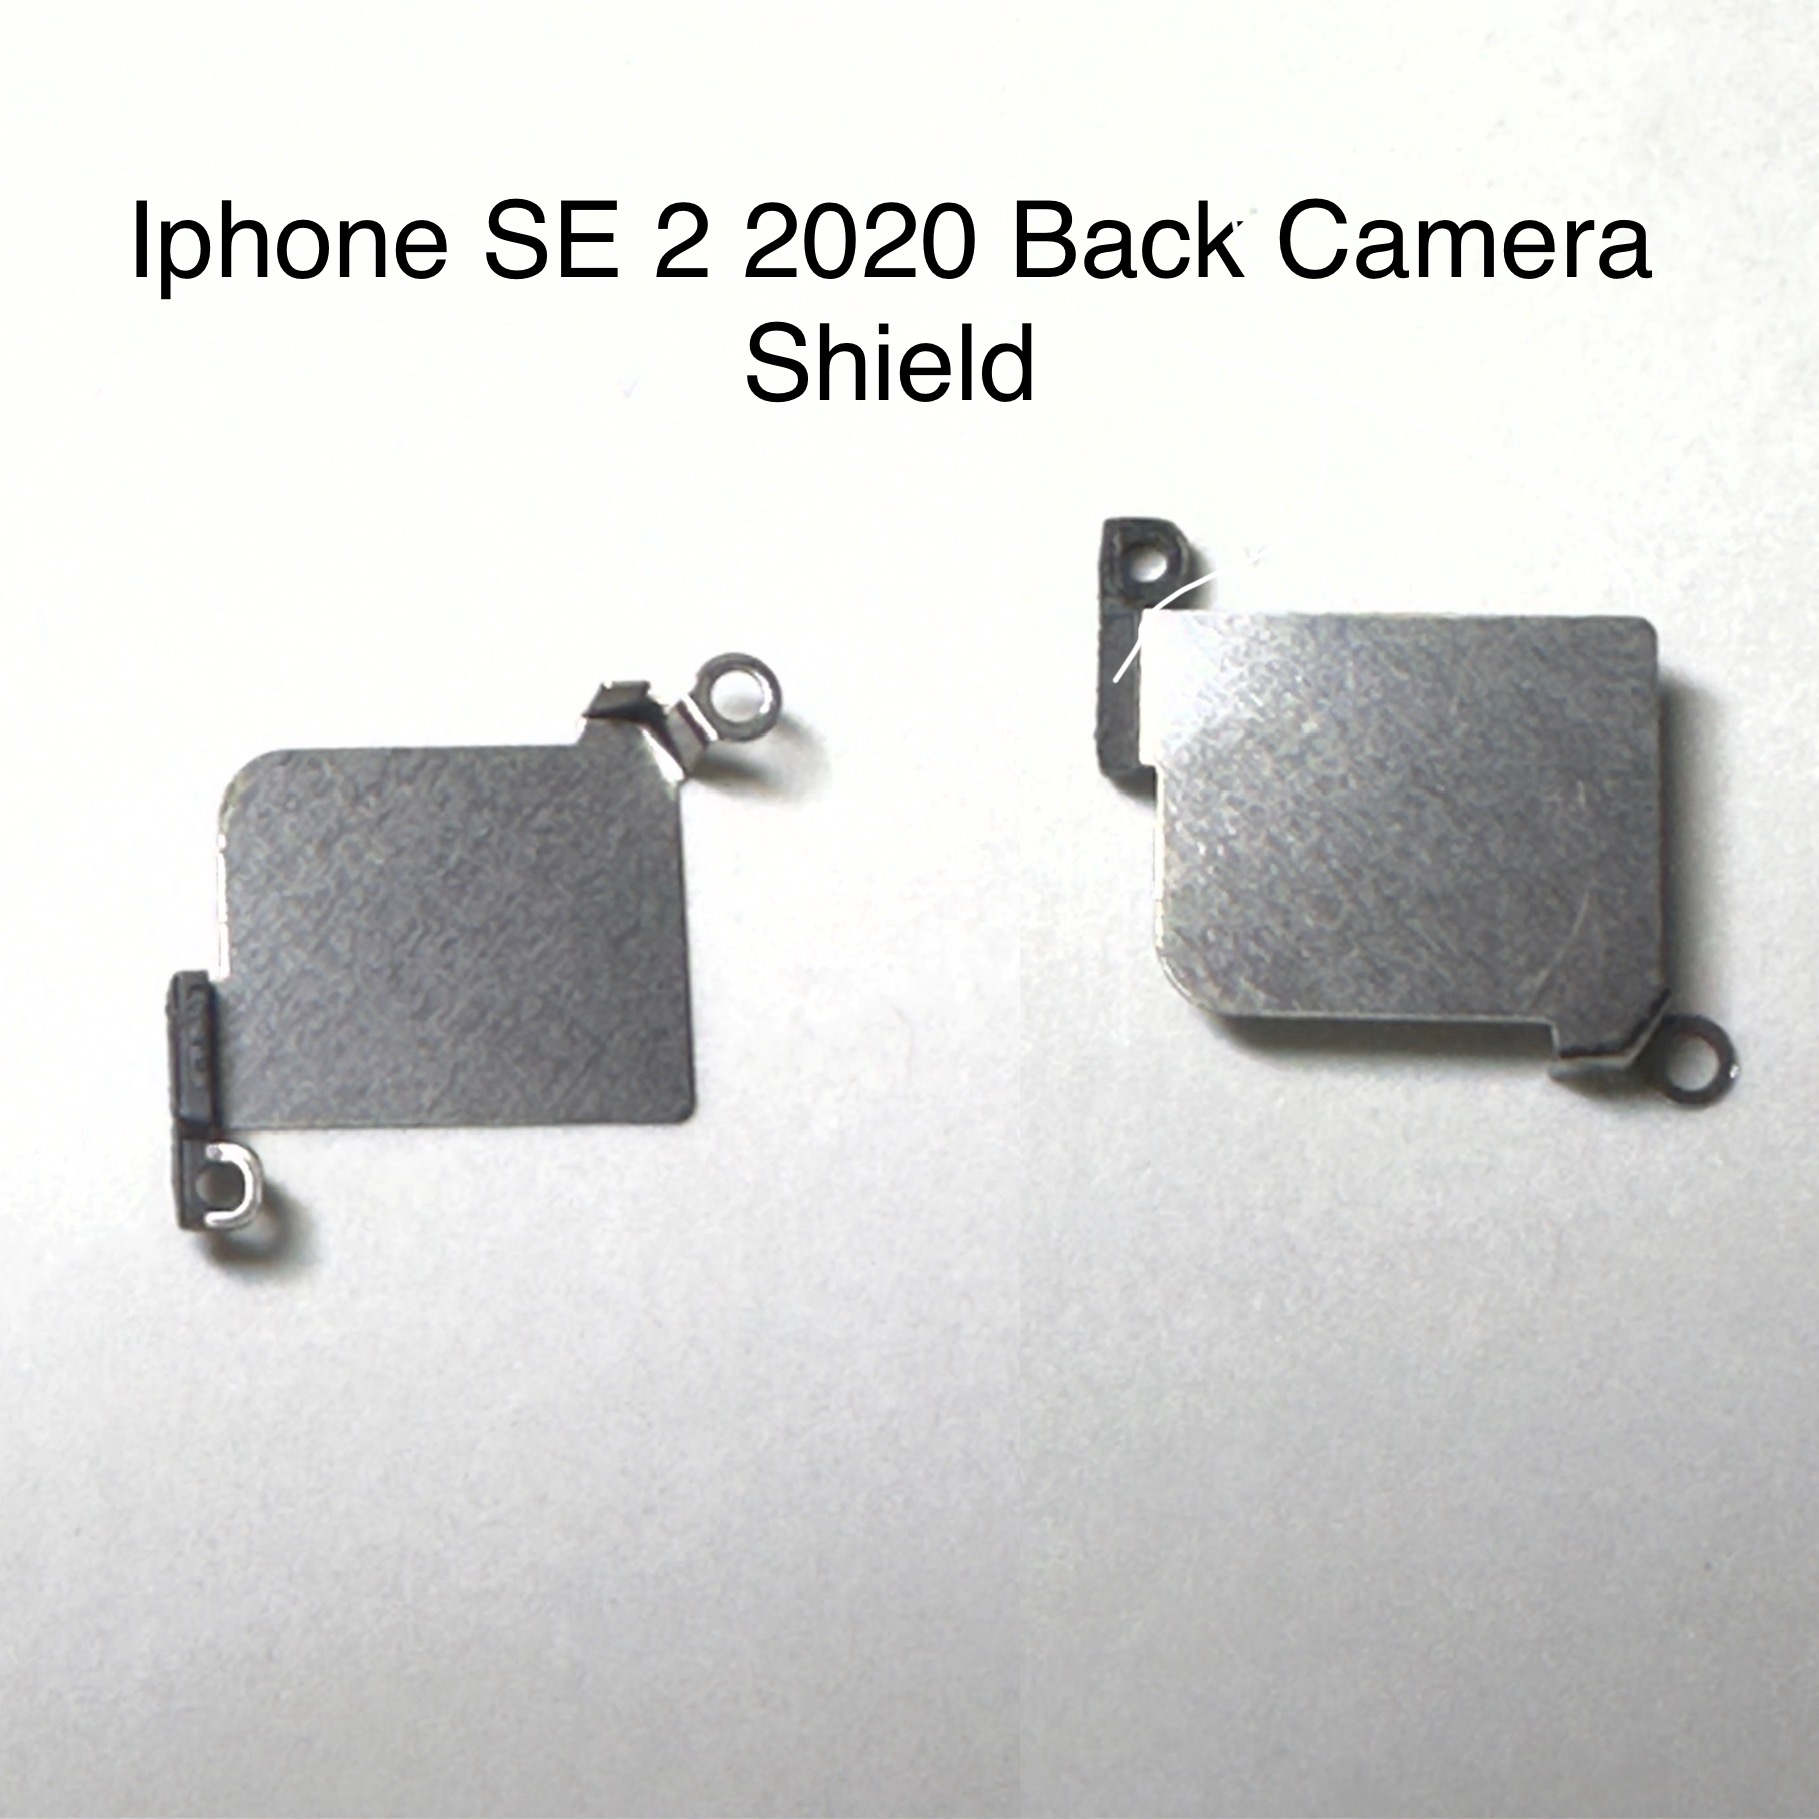 iPhone SE 2020 back camera shield